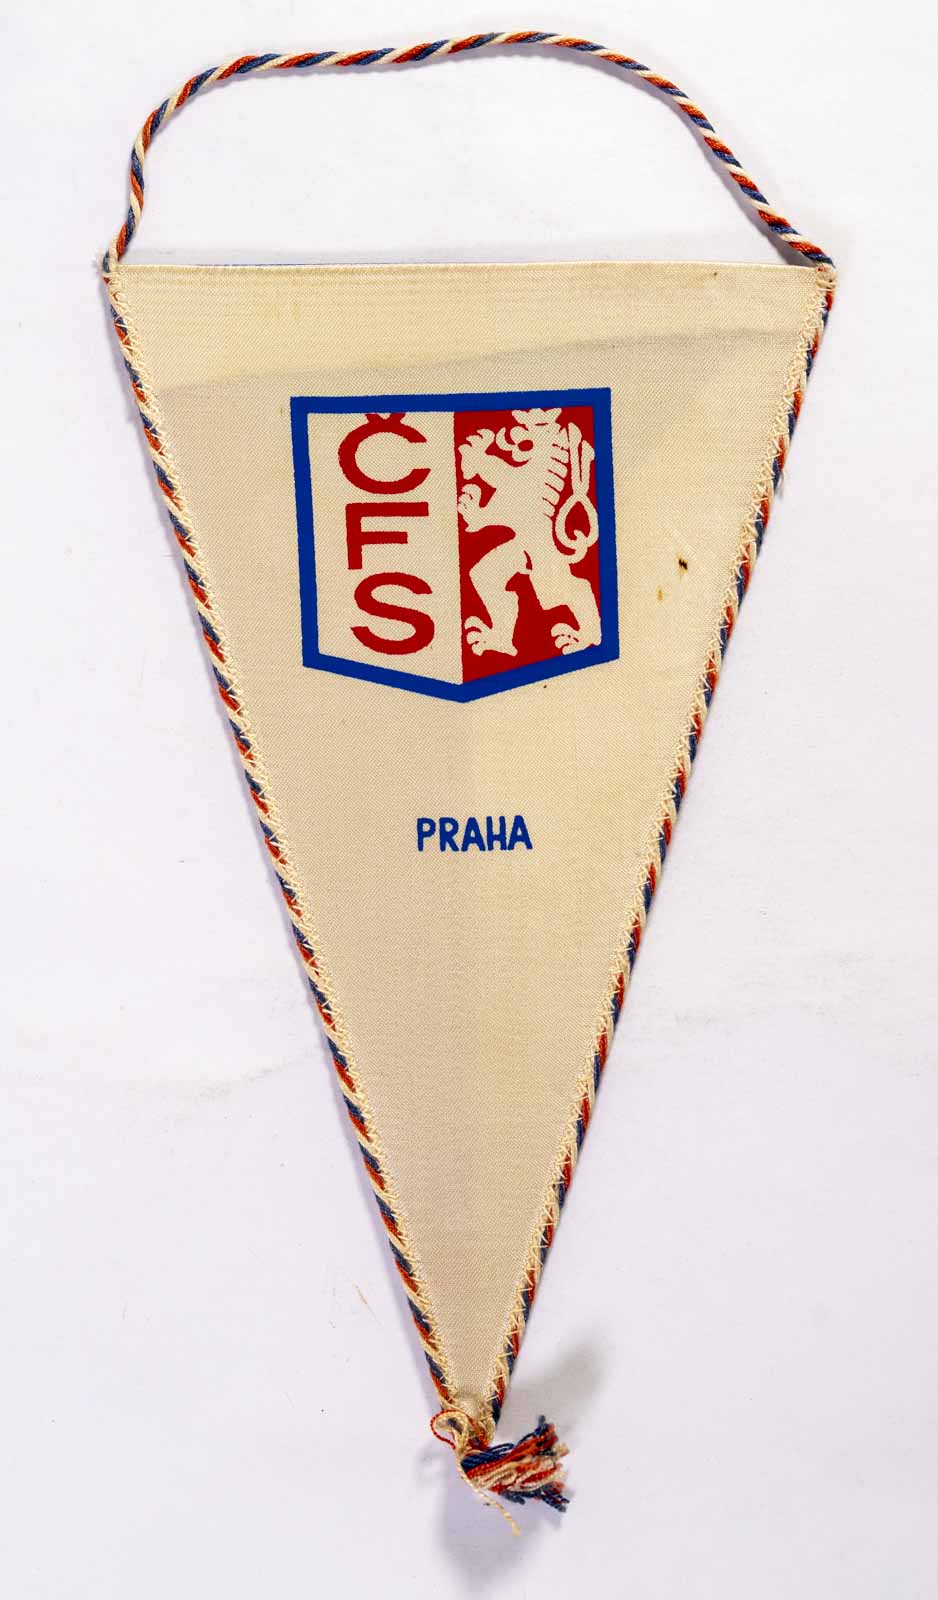 Vlajka klubová, ČFS Praha